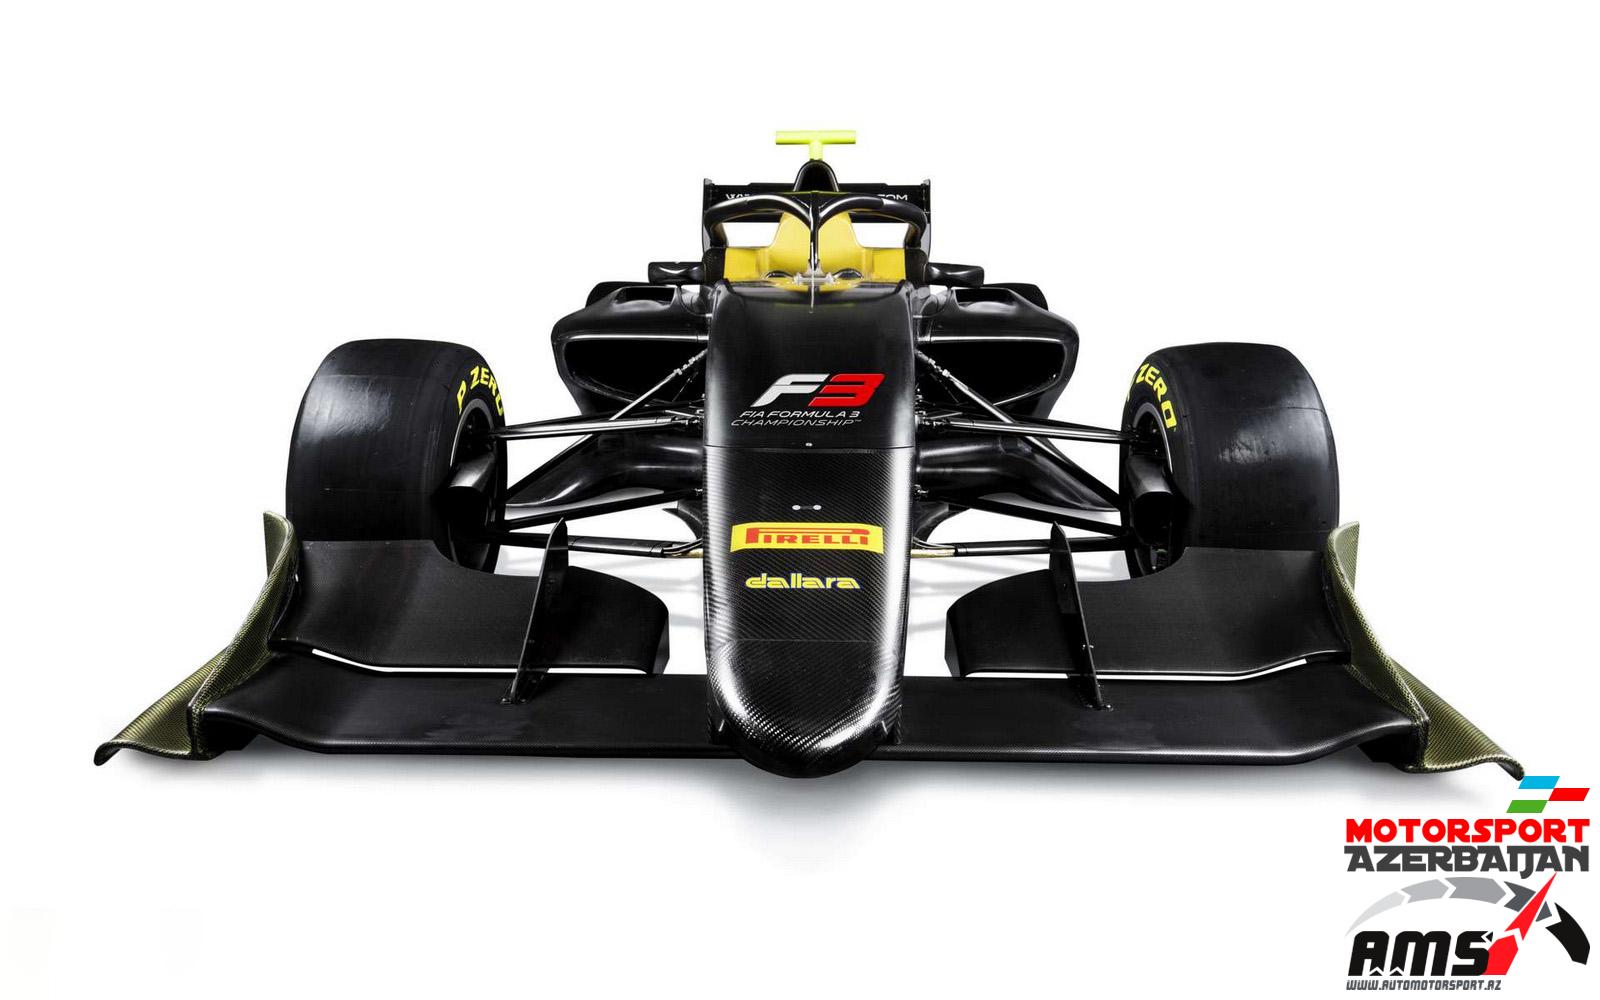 Formula 3 chassis